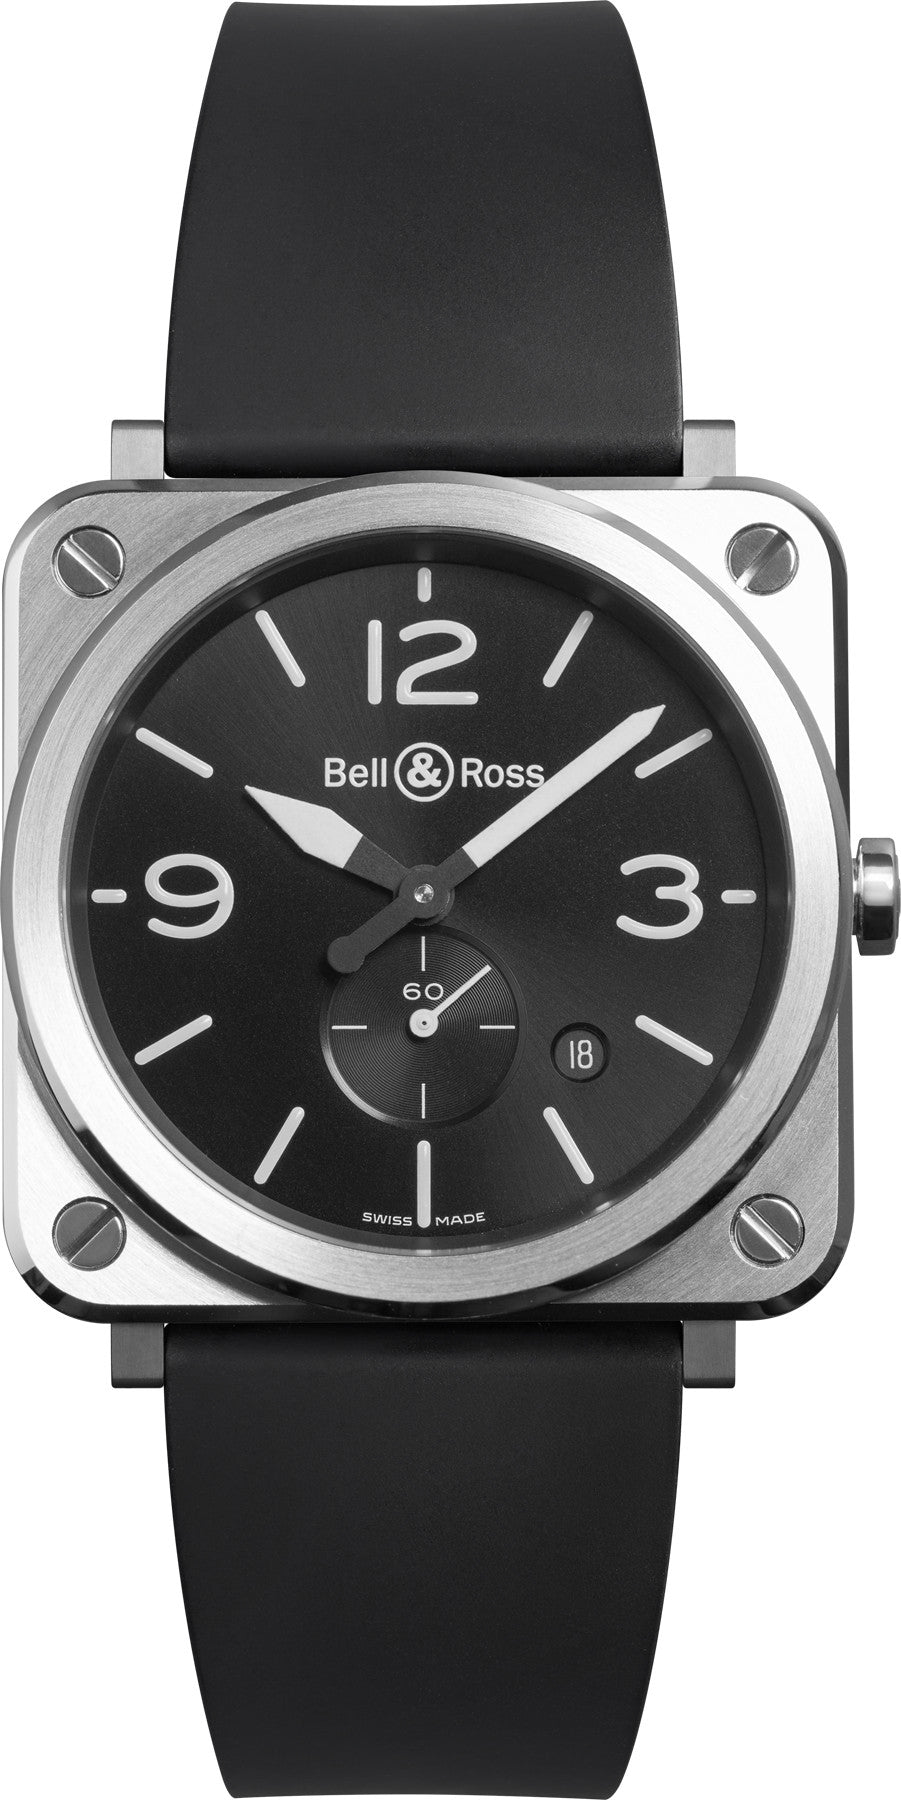 BellandRoss Watch Brs Steel Quartz